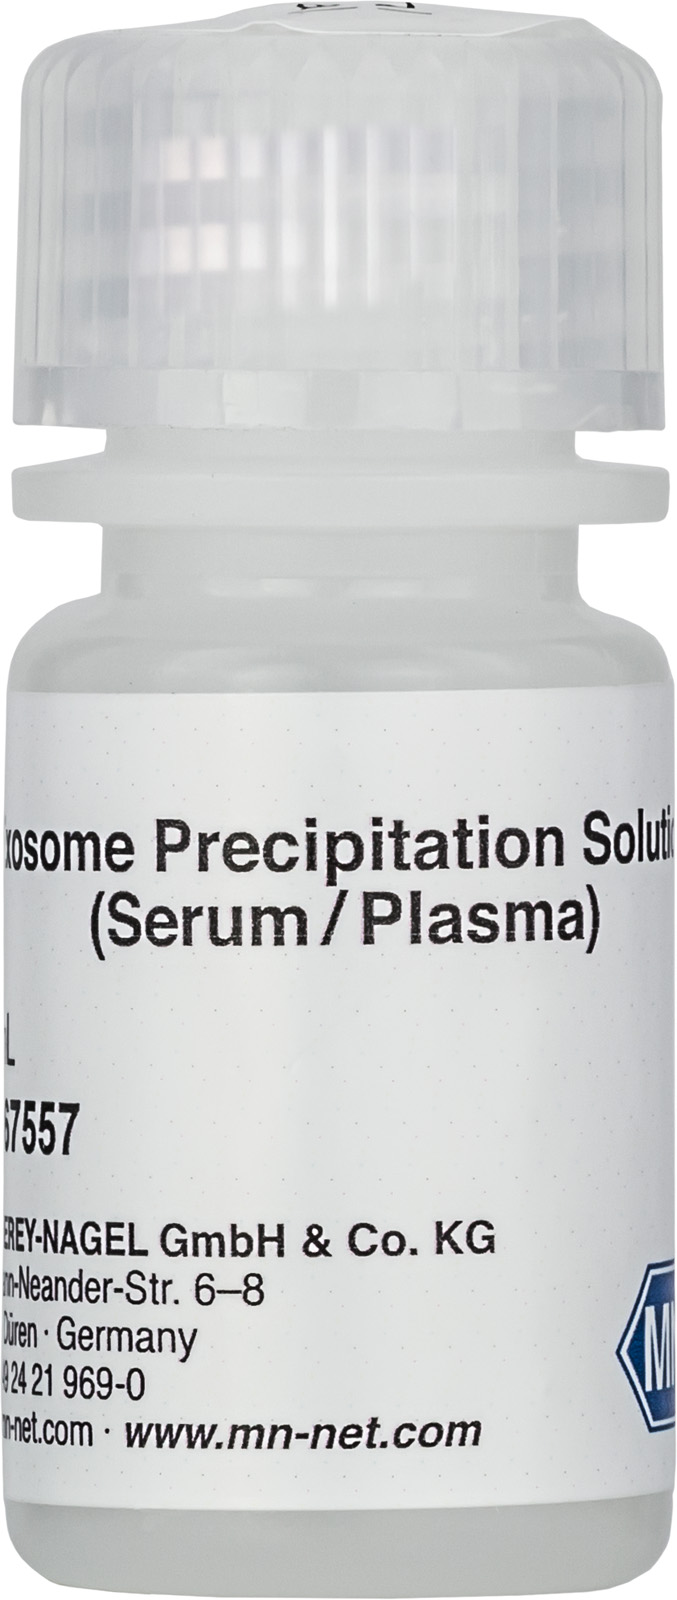 MicroRNA Pojedyncze izolacje Exosome Precipitation Solution (Serum / Plasma)